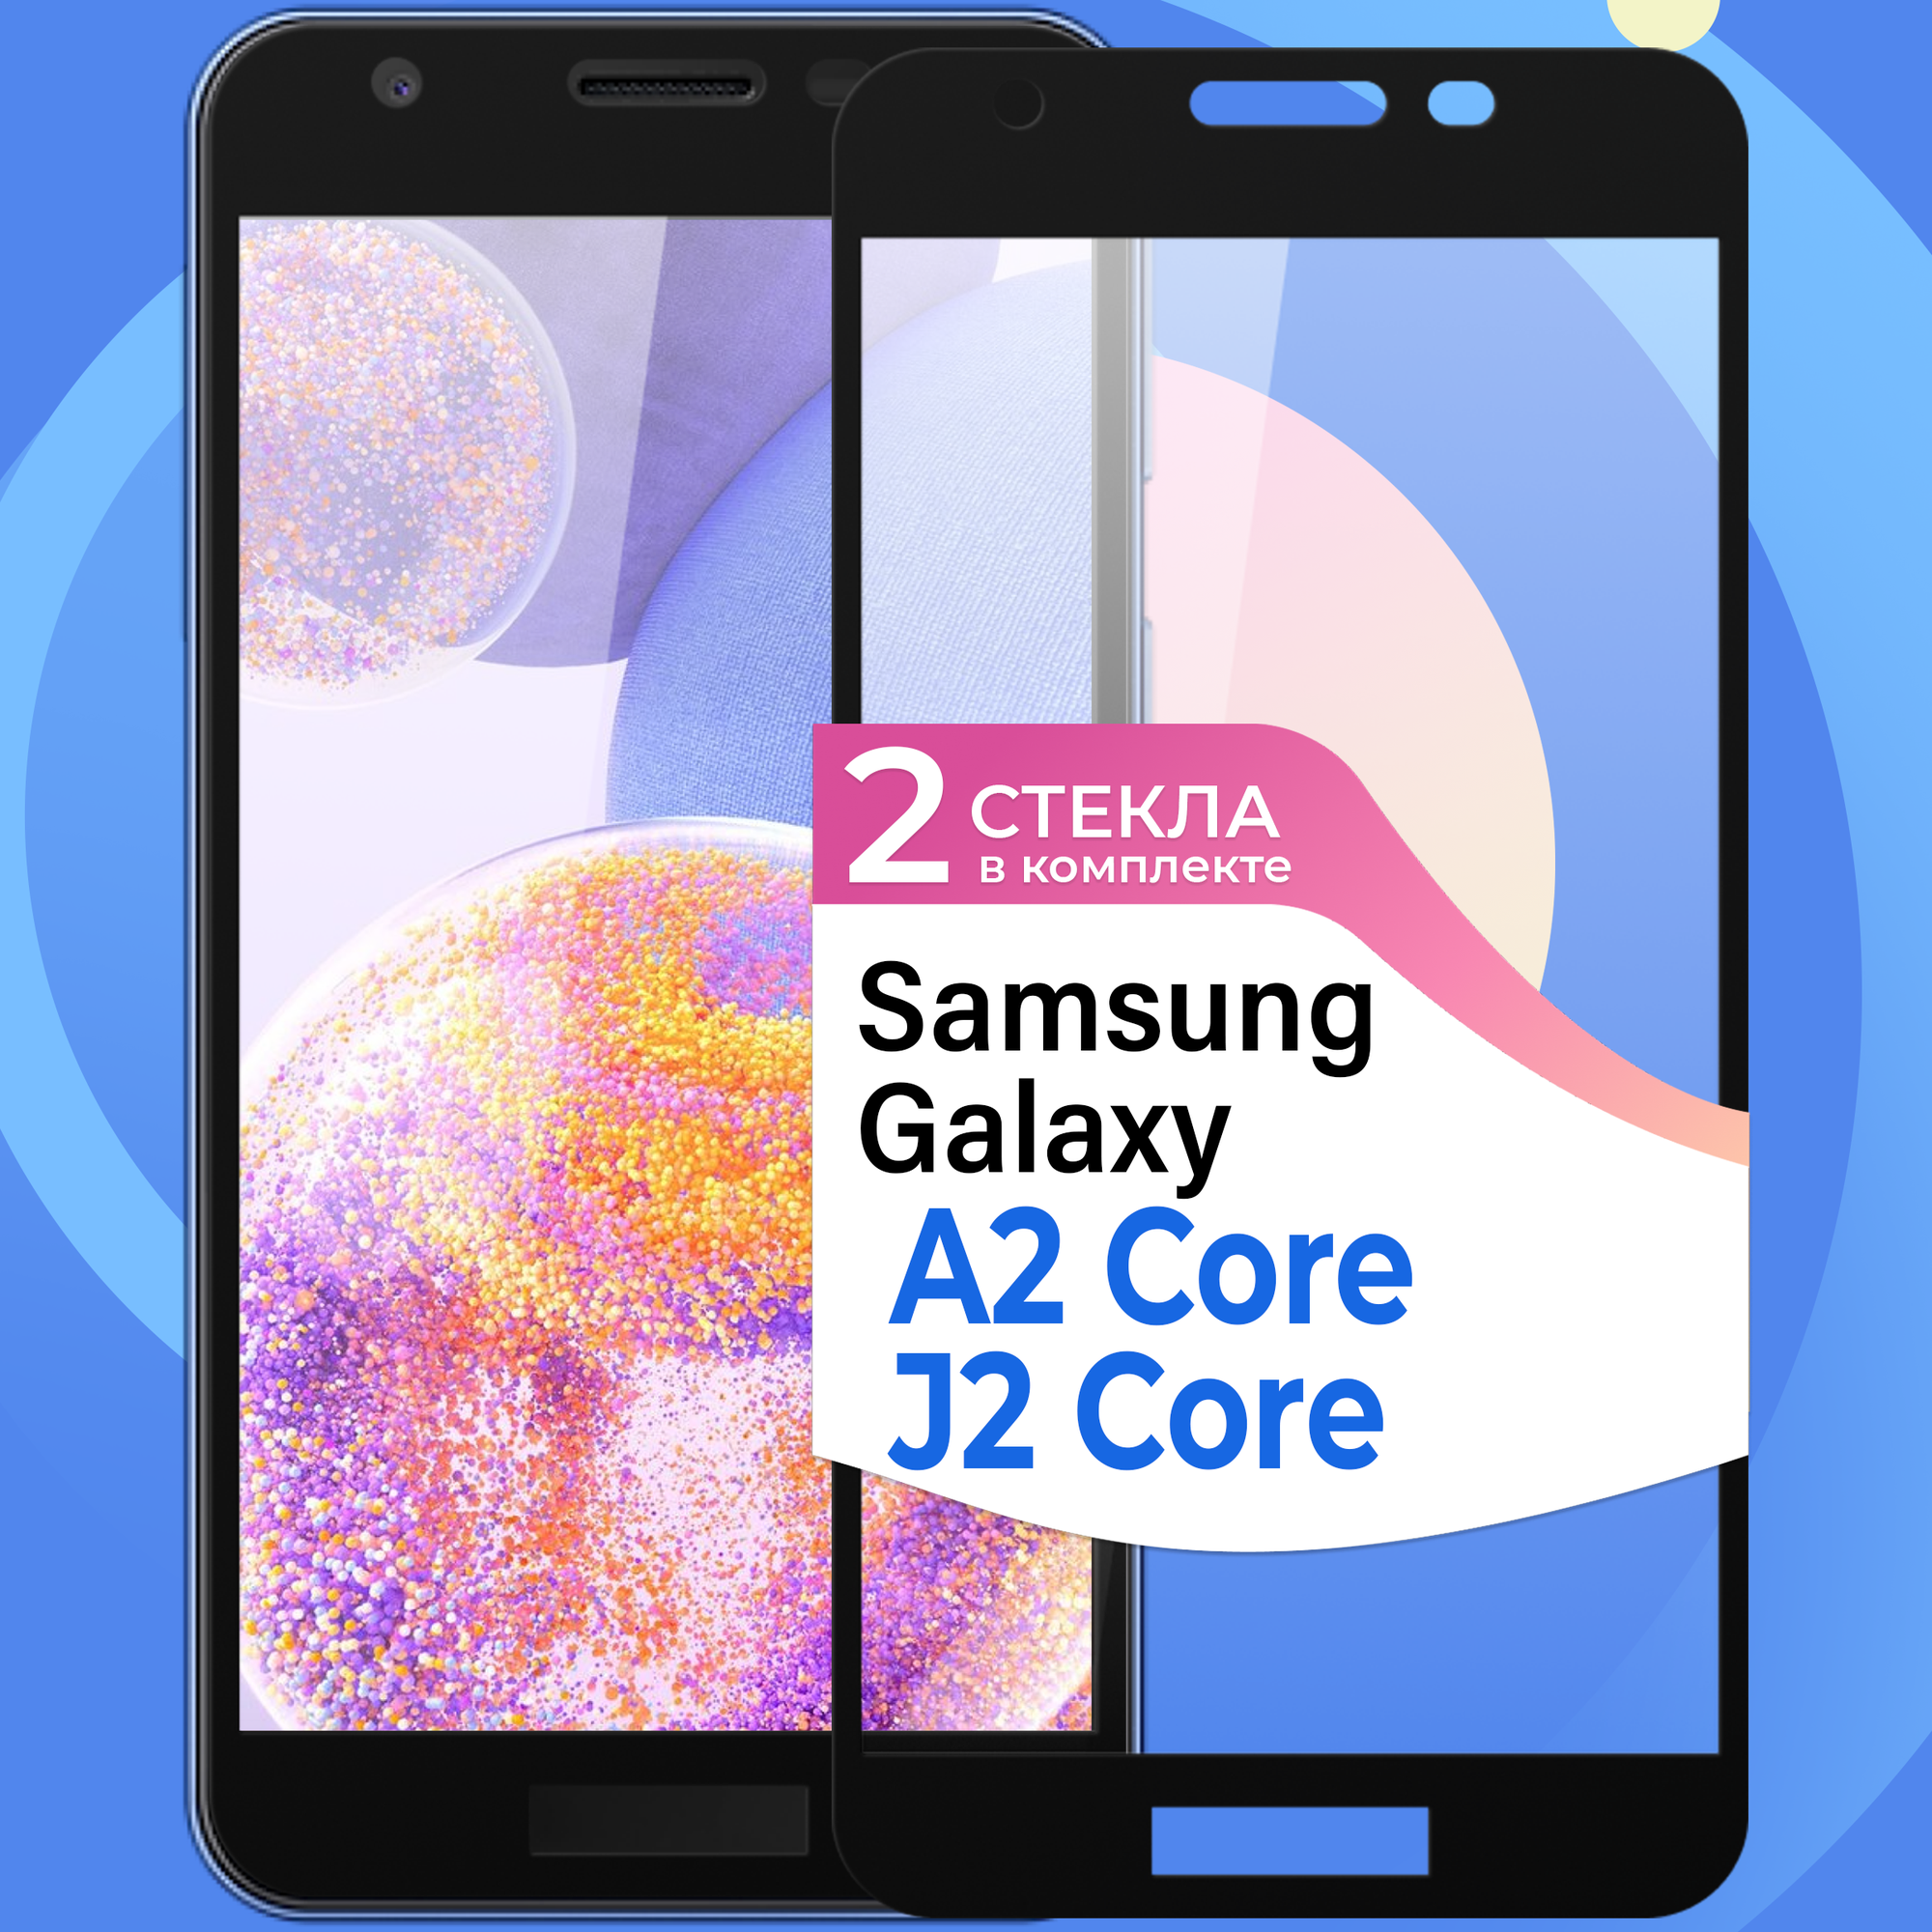 Комплект 2 шт. Защитное стекло на телефон Samsung Galaxy J2 Core и Galaxy A2 Core / Противоударное олеофобное стекло для смартфона Самсунг Галакси Джей 2 Кор и Галакси А2 Кор